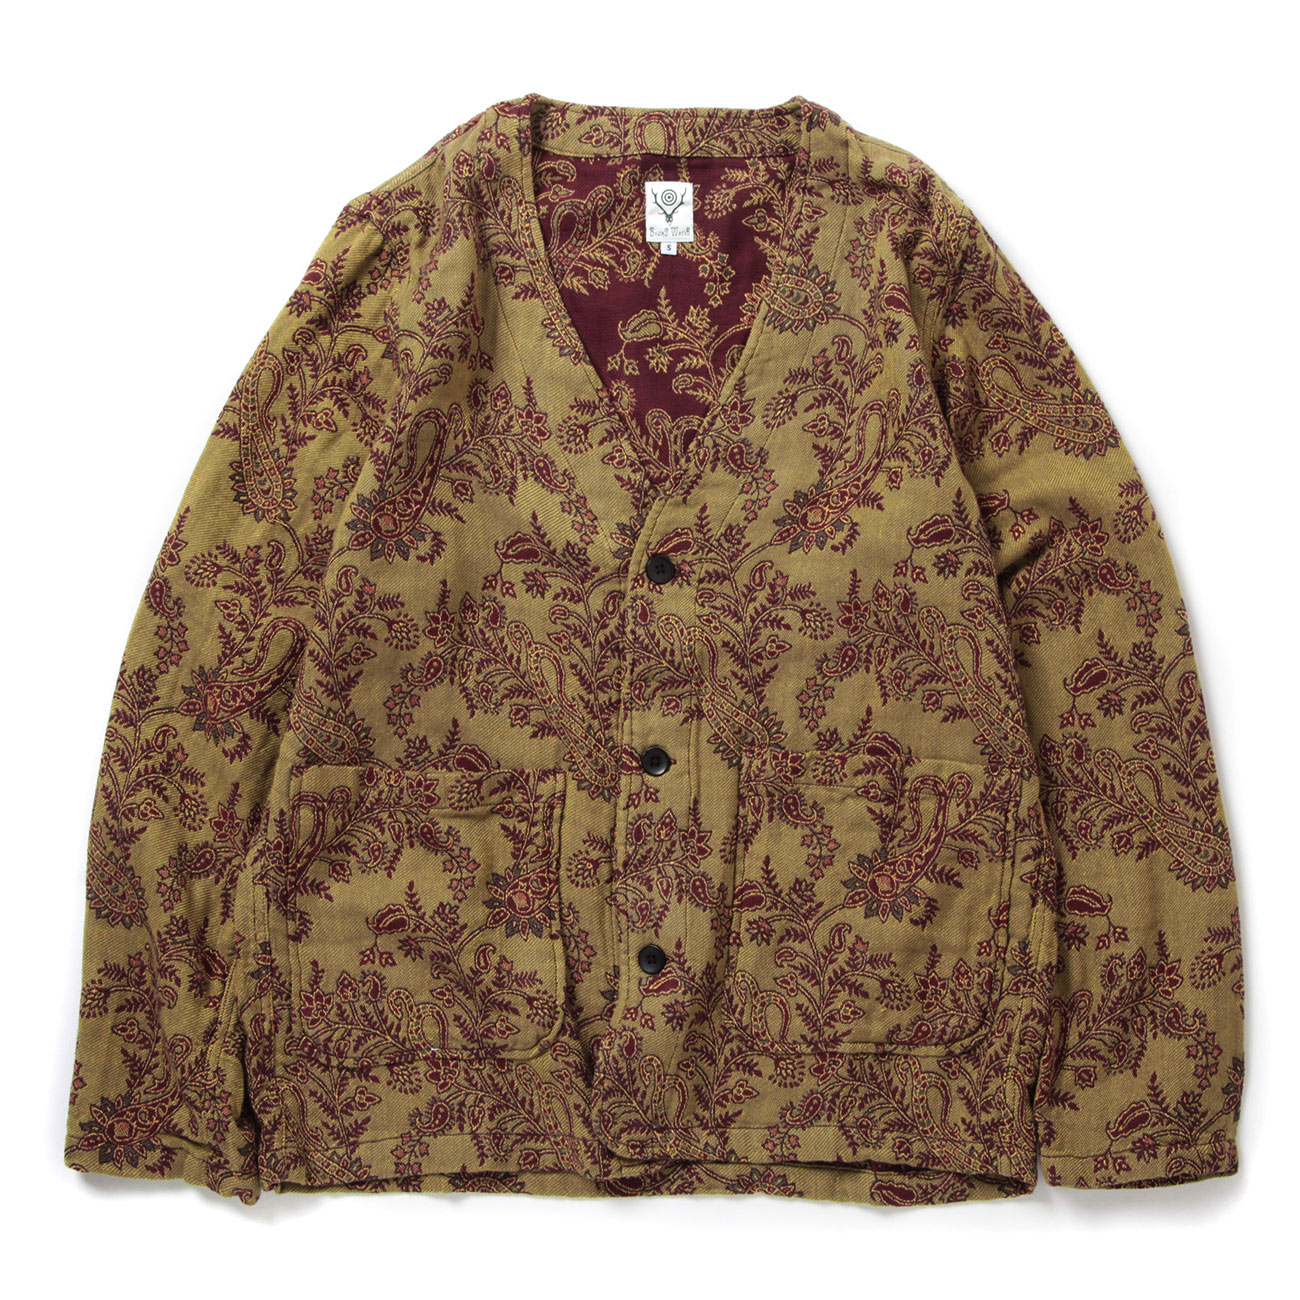 V Neck Jacket - Cotton Jacquard / Paisley - Green